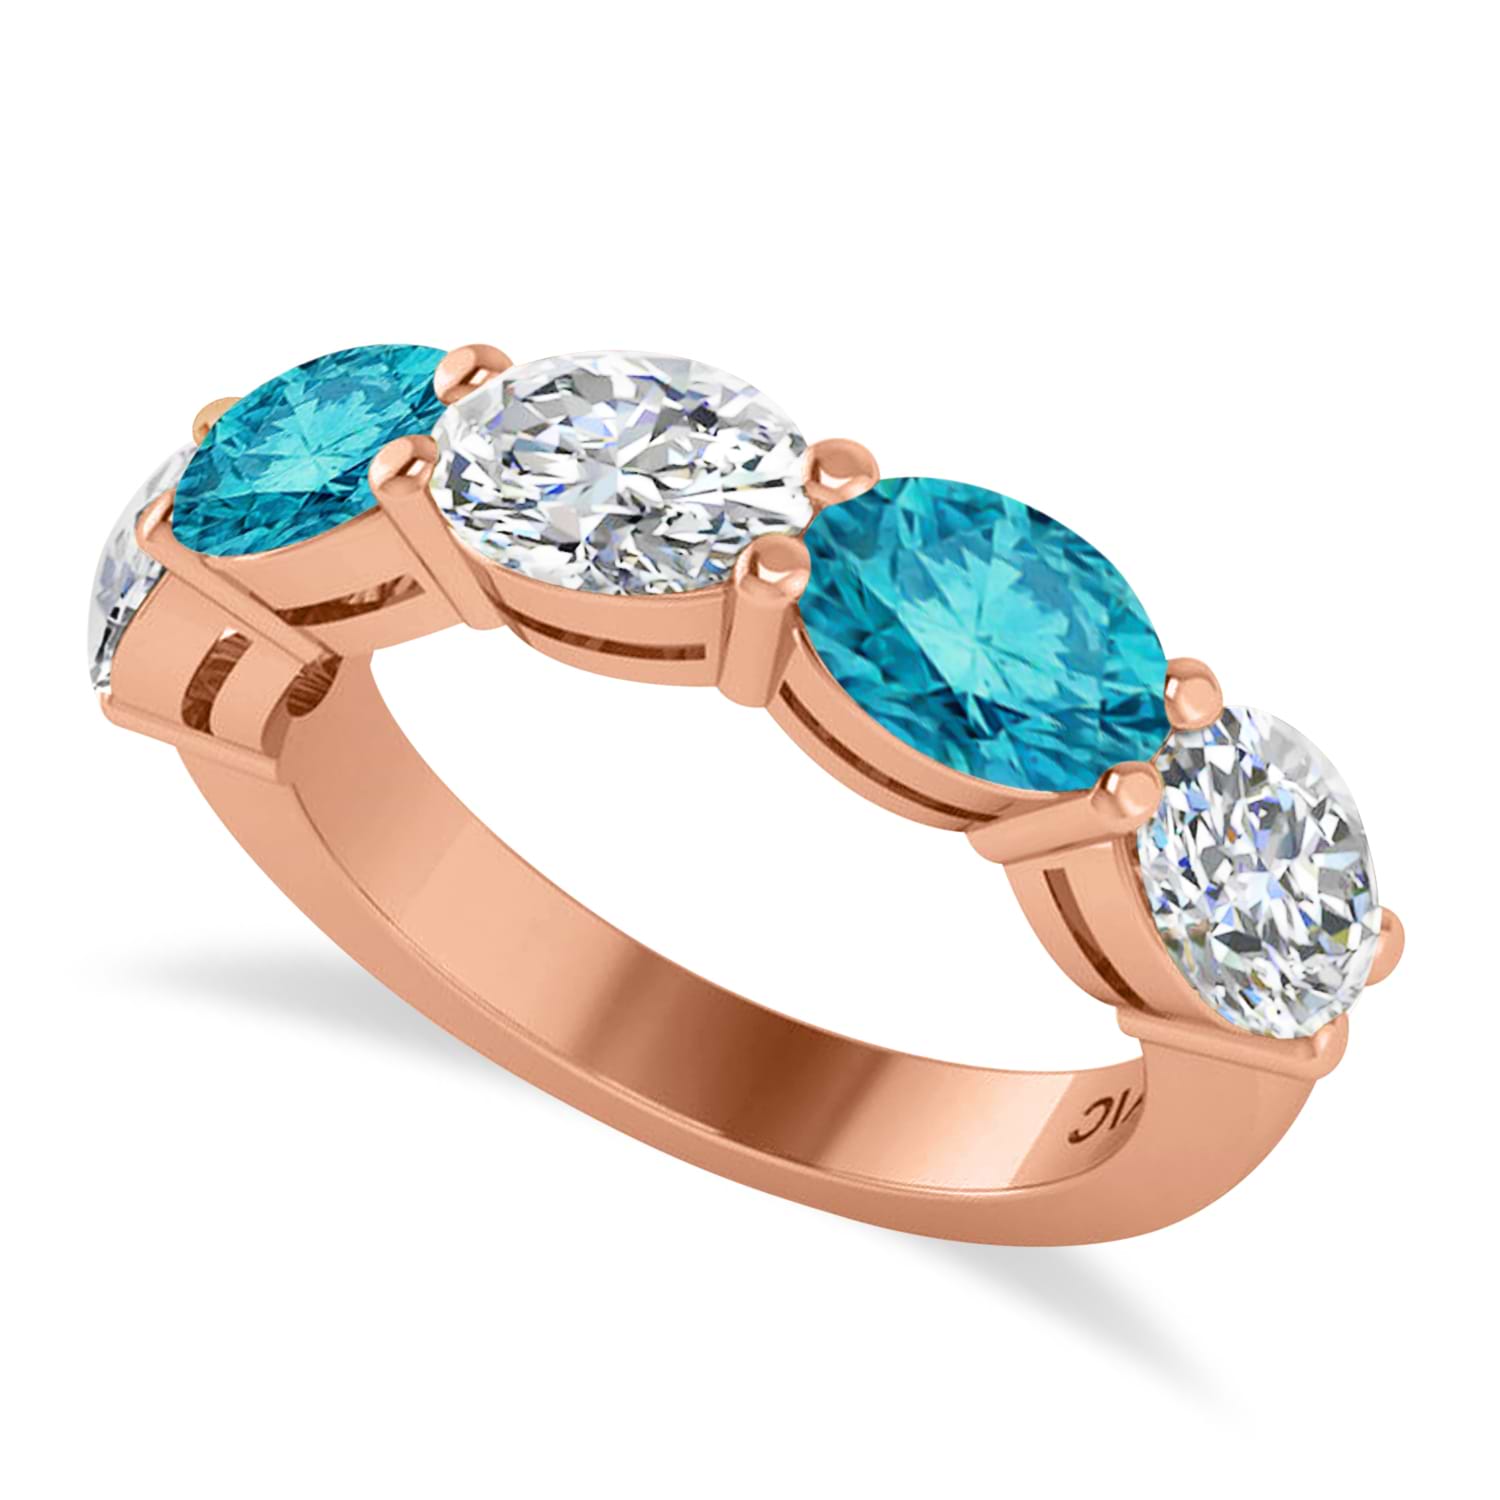 Oval Blue & White Diamond Five Stone Ring 14k Rose Gold (5.00ct)